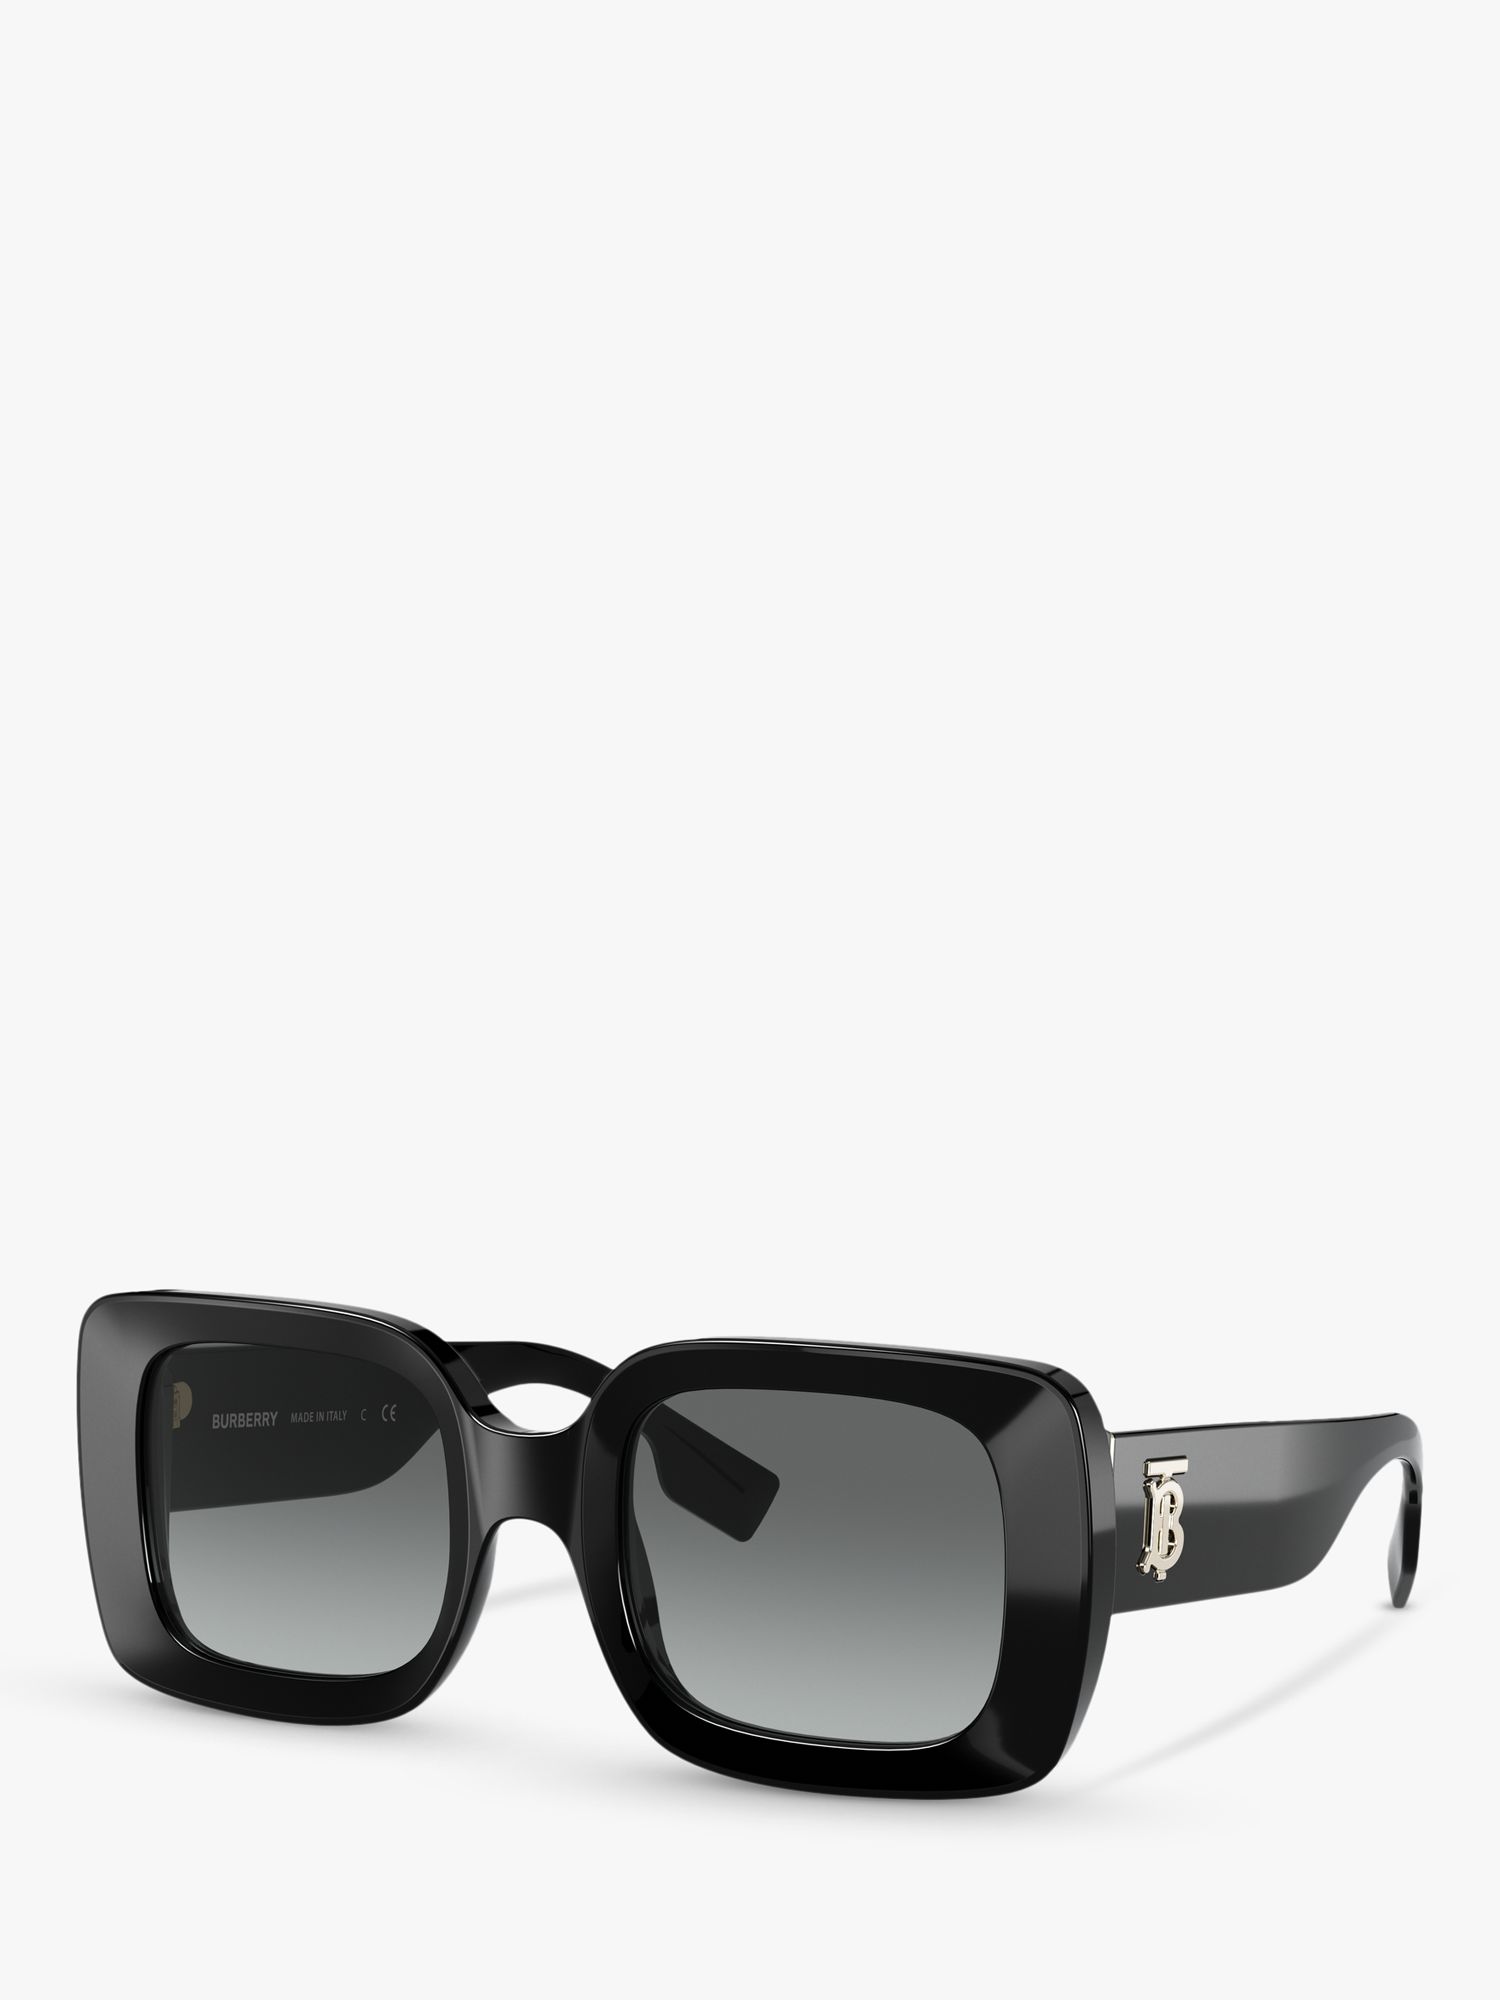 Burberry BE4327 Women's Square Sunglasses, Black/Grey Gradient at John ...